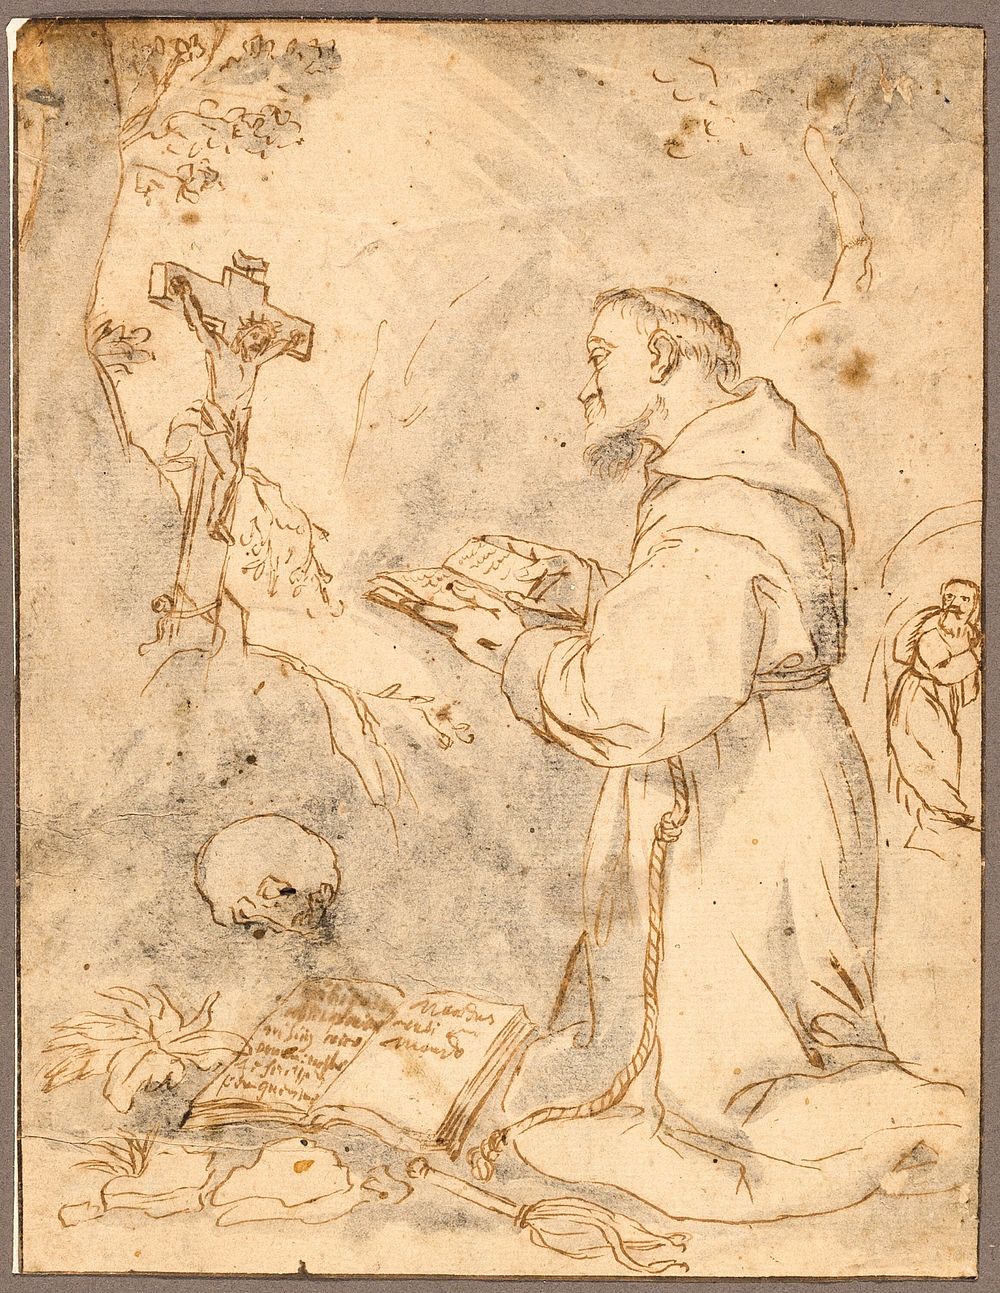 Saint Francis Praying by Bartolomé Estéban Murillo